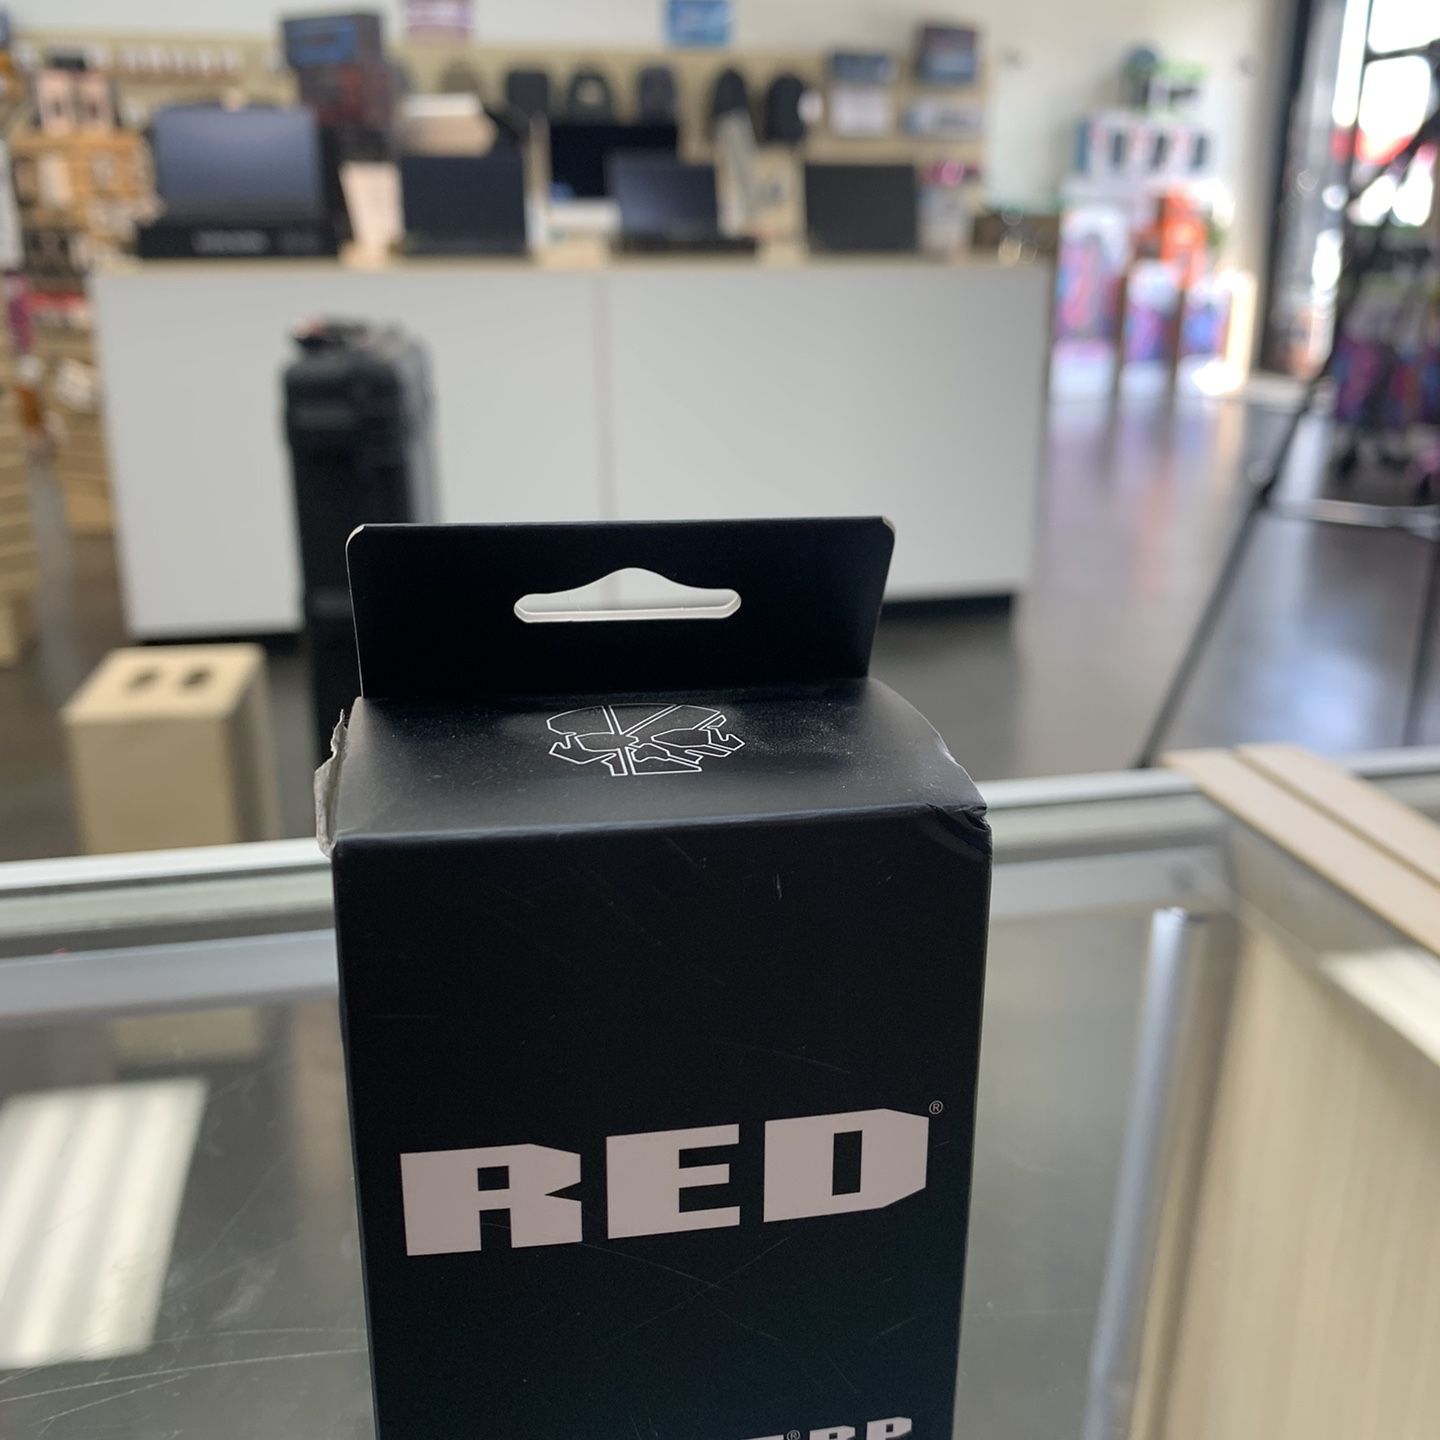 RED RedVolt Battery For Komodo